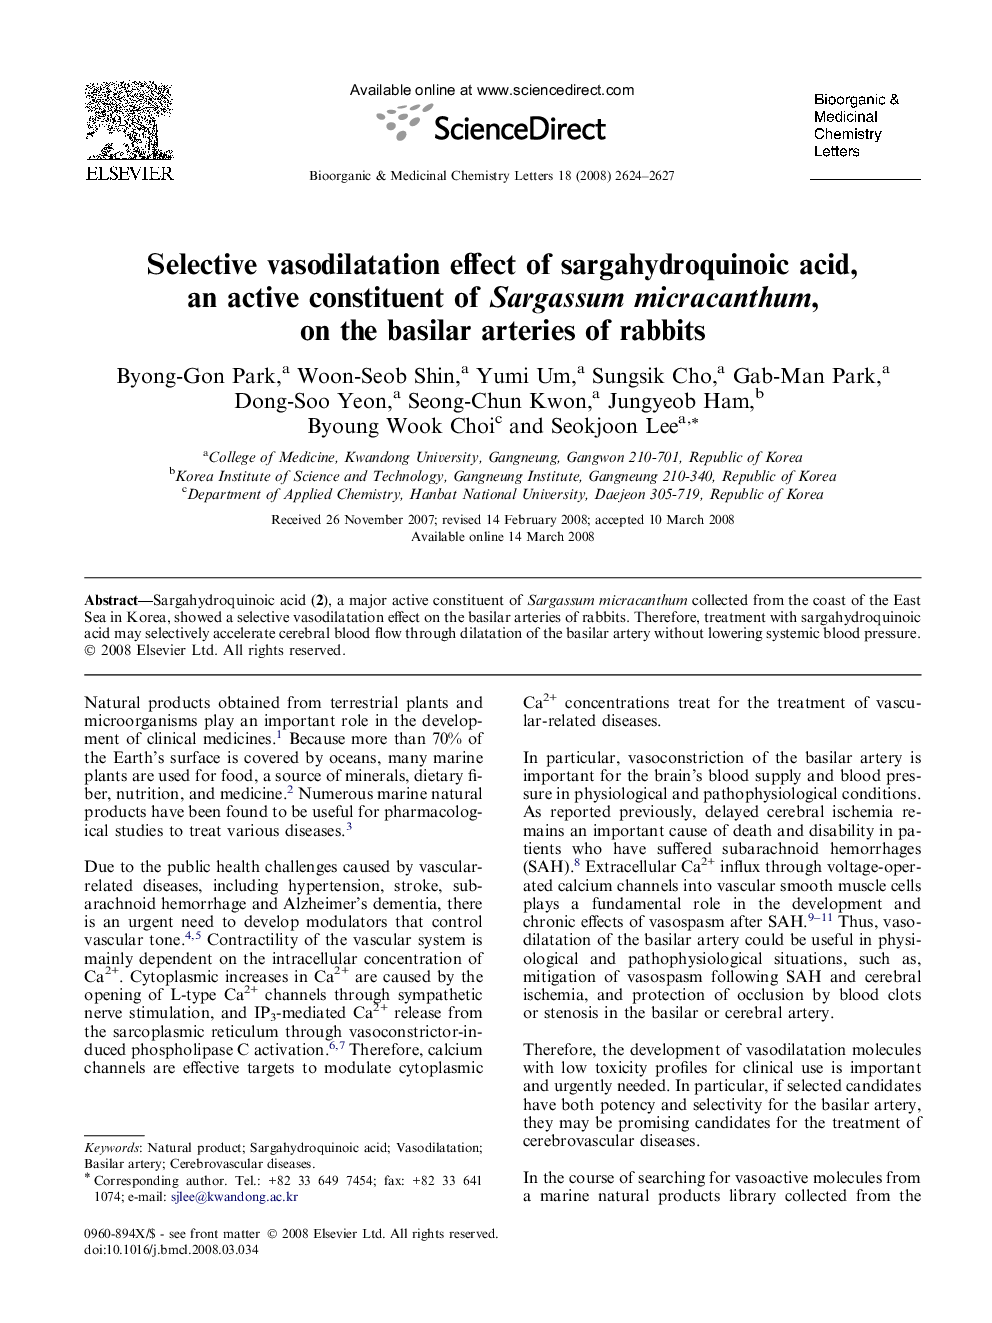 Selective vasodilatation effect of sargahydroquinoic acid, an active constituent of Sargassum micracanthum, on the basilar arteries of rabbits